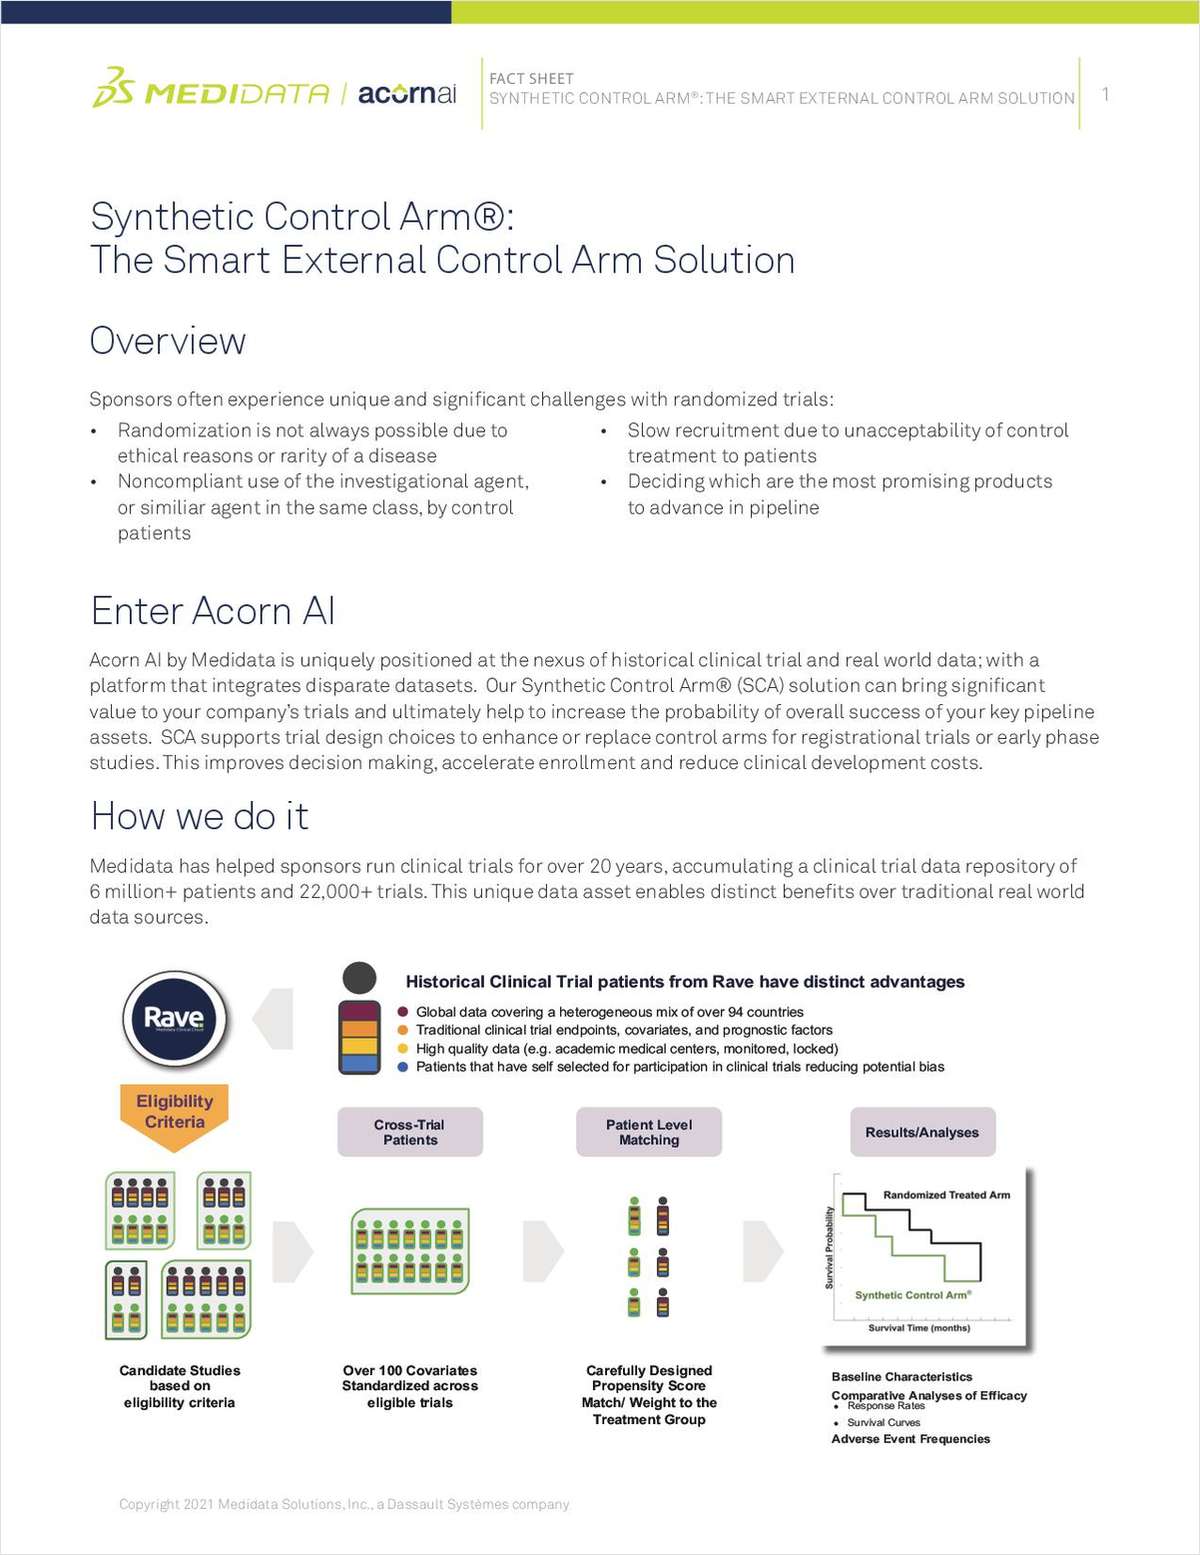 Medidata Acorn AI Synthetic Control Arm Factsheet